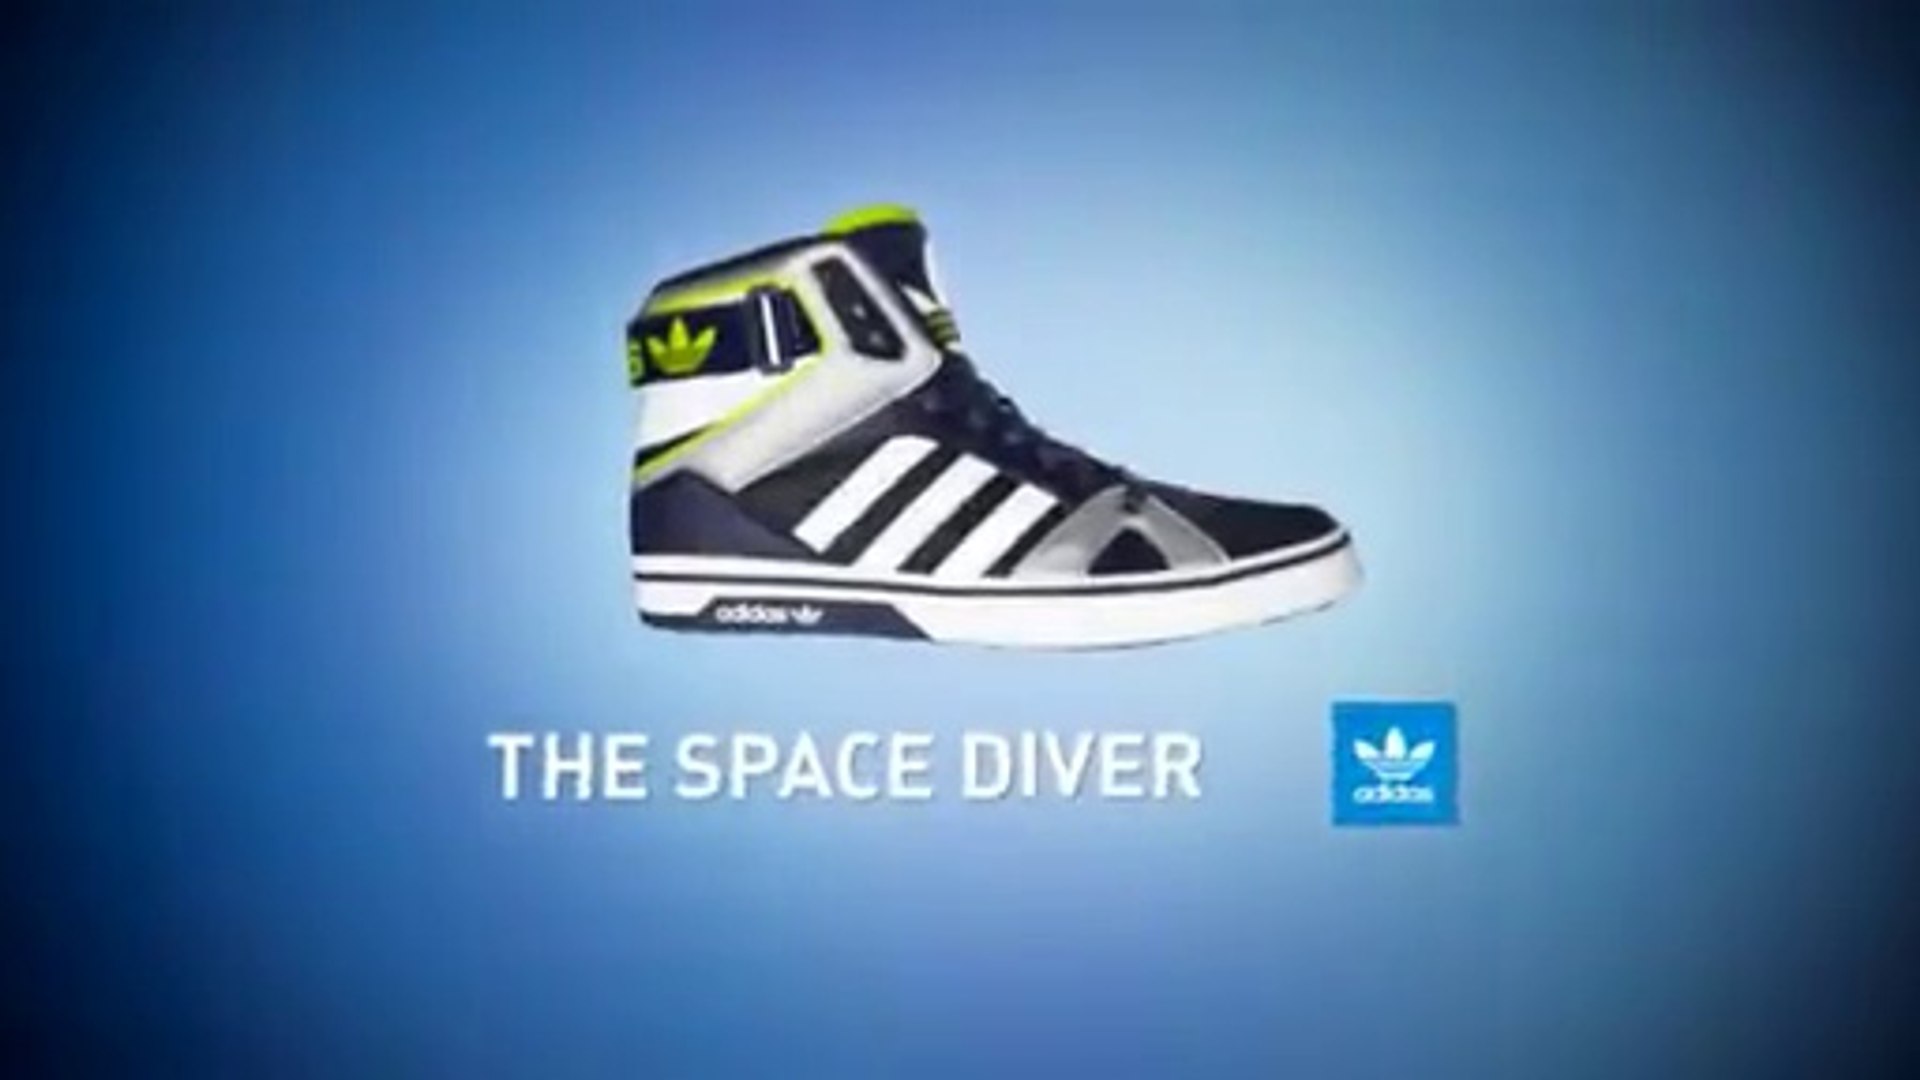 adidas space diver foot locker france